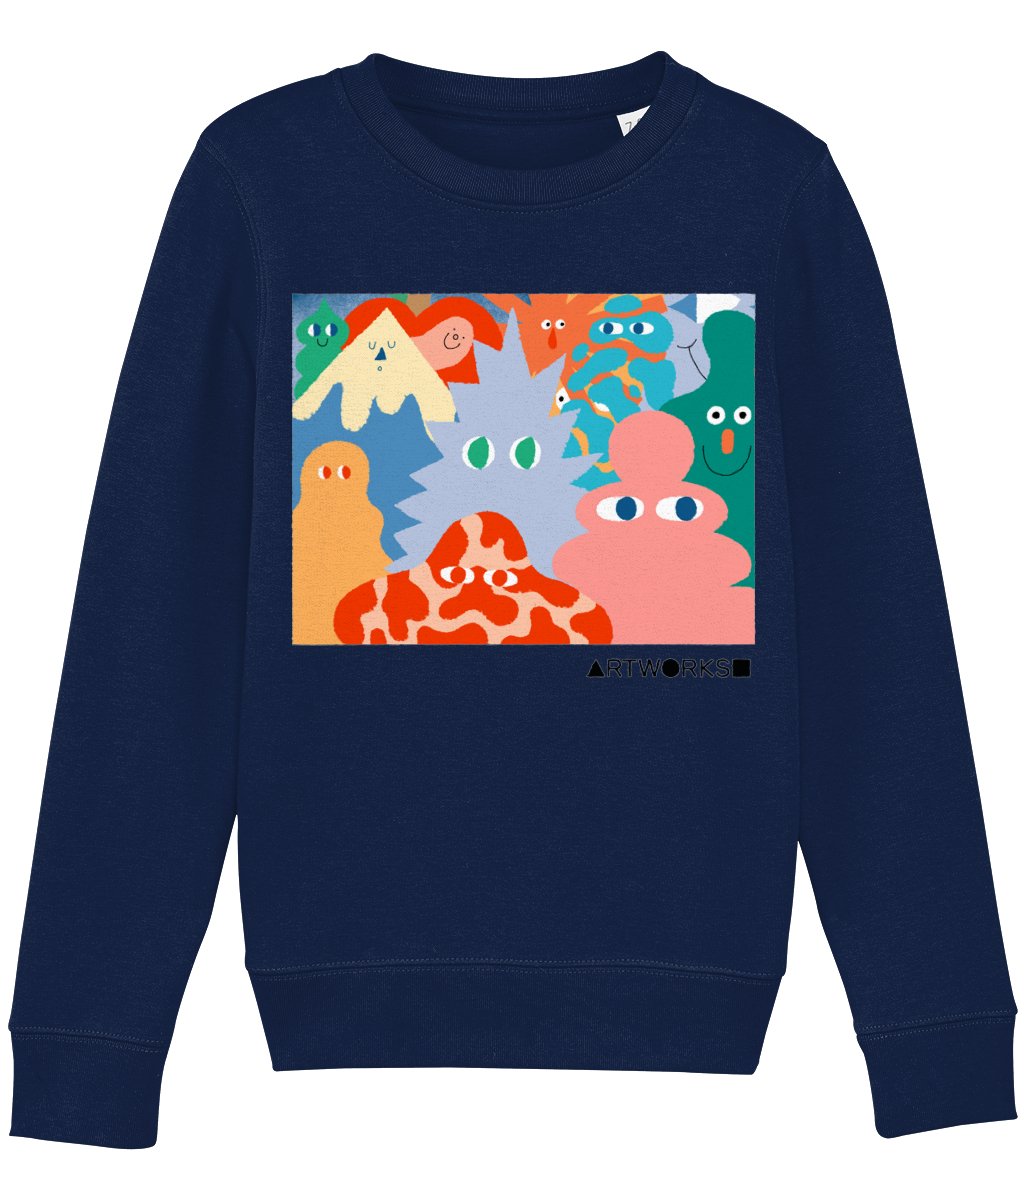 Buddies Sweatshirt - Artworks Clothing